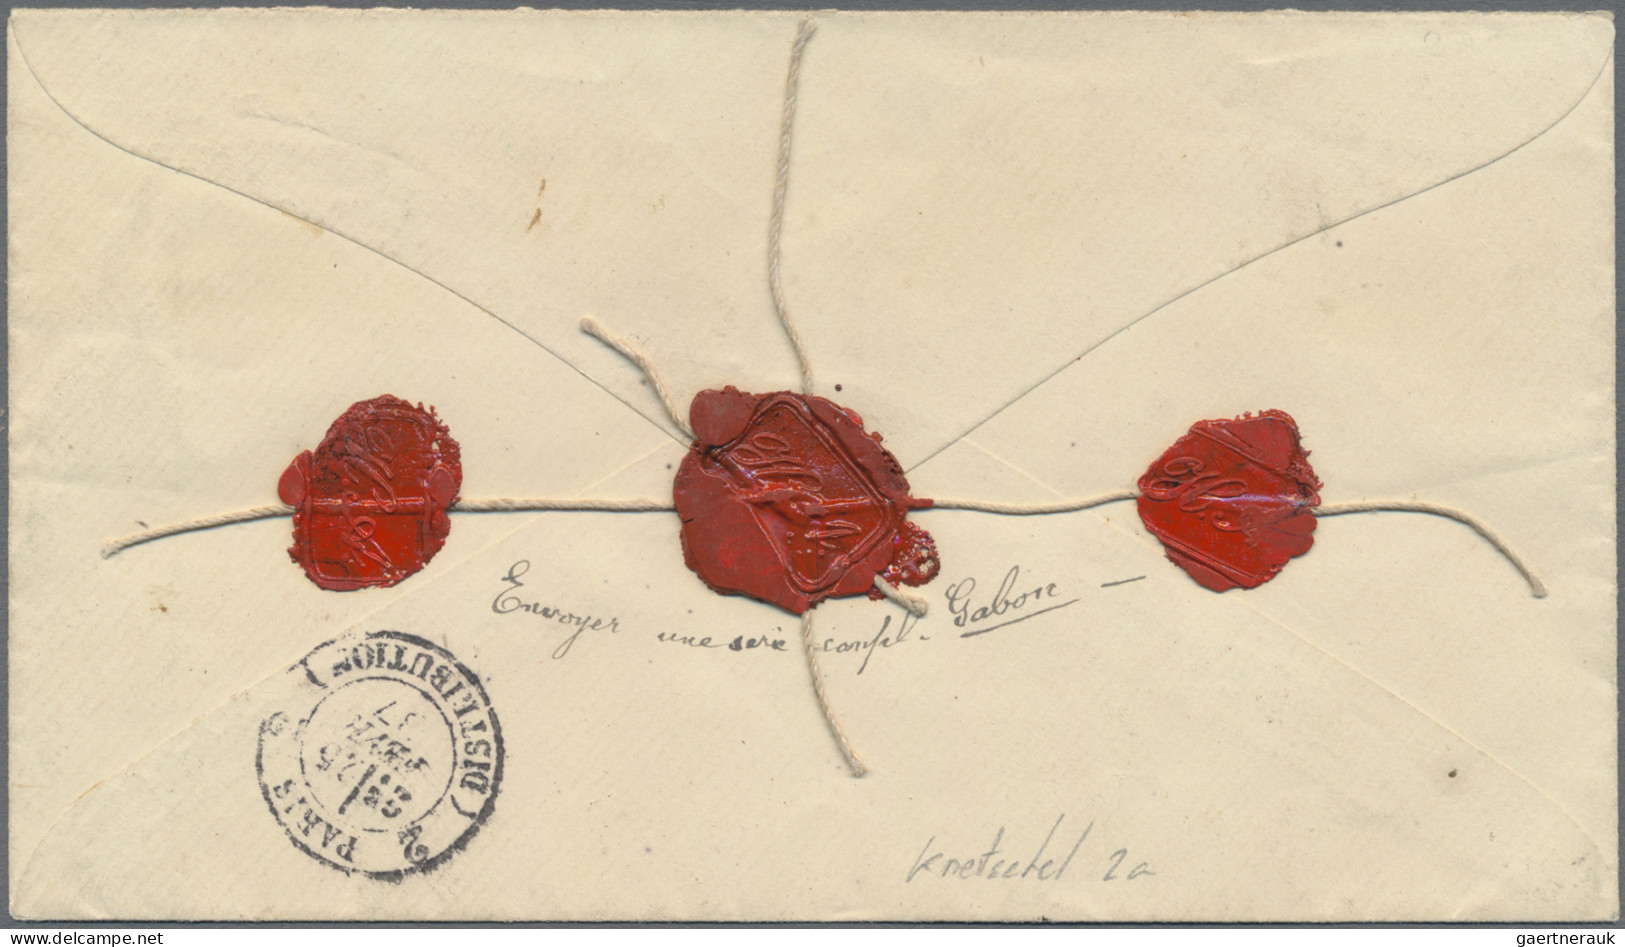 Argentina - Postal Stationary: 1887 Postal Stationery Envelope 8c. Red Used Regi - Ganzsachen